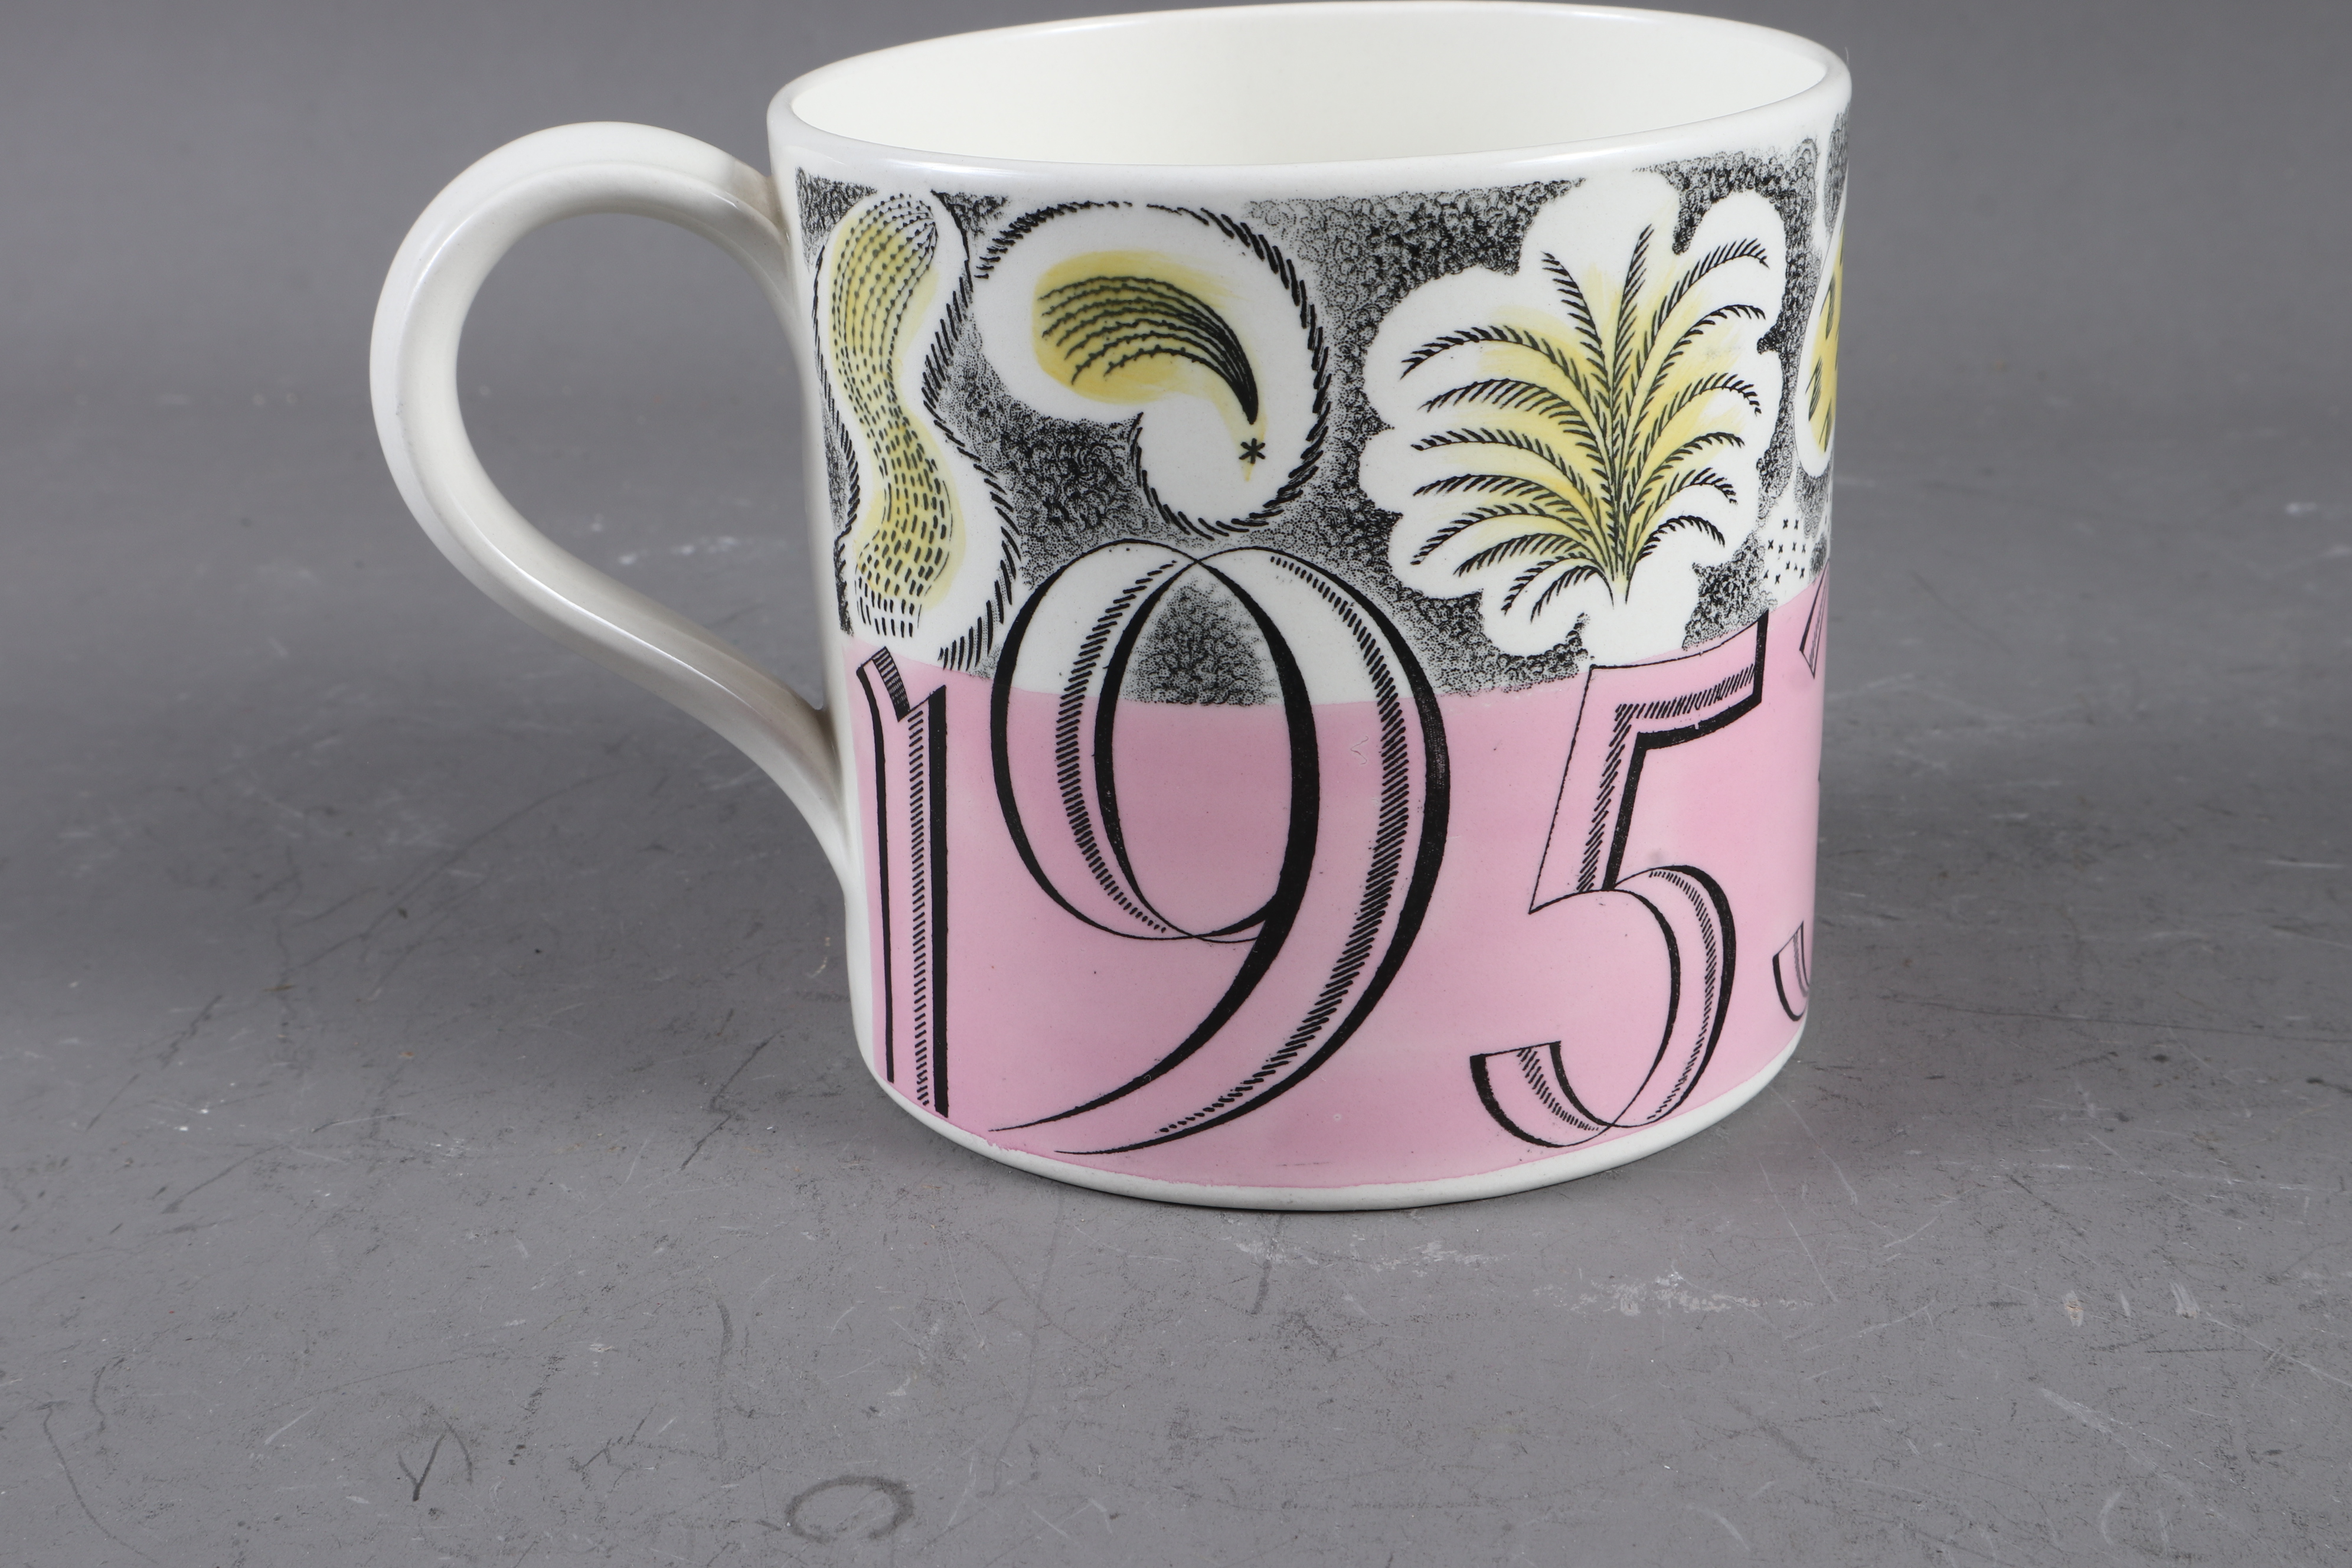 A Wedgwood 1953 commemorative mug, designed by Eric Ravilious, a Royal Copenhagen model of a cat, - Image 3 of 6